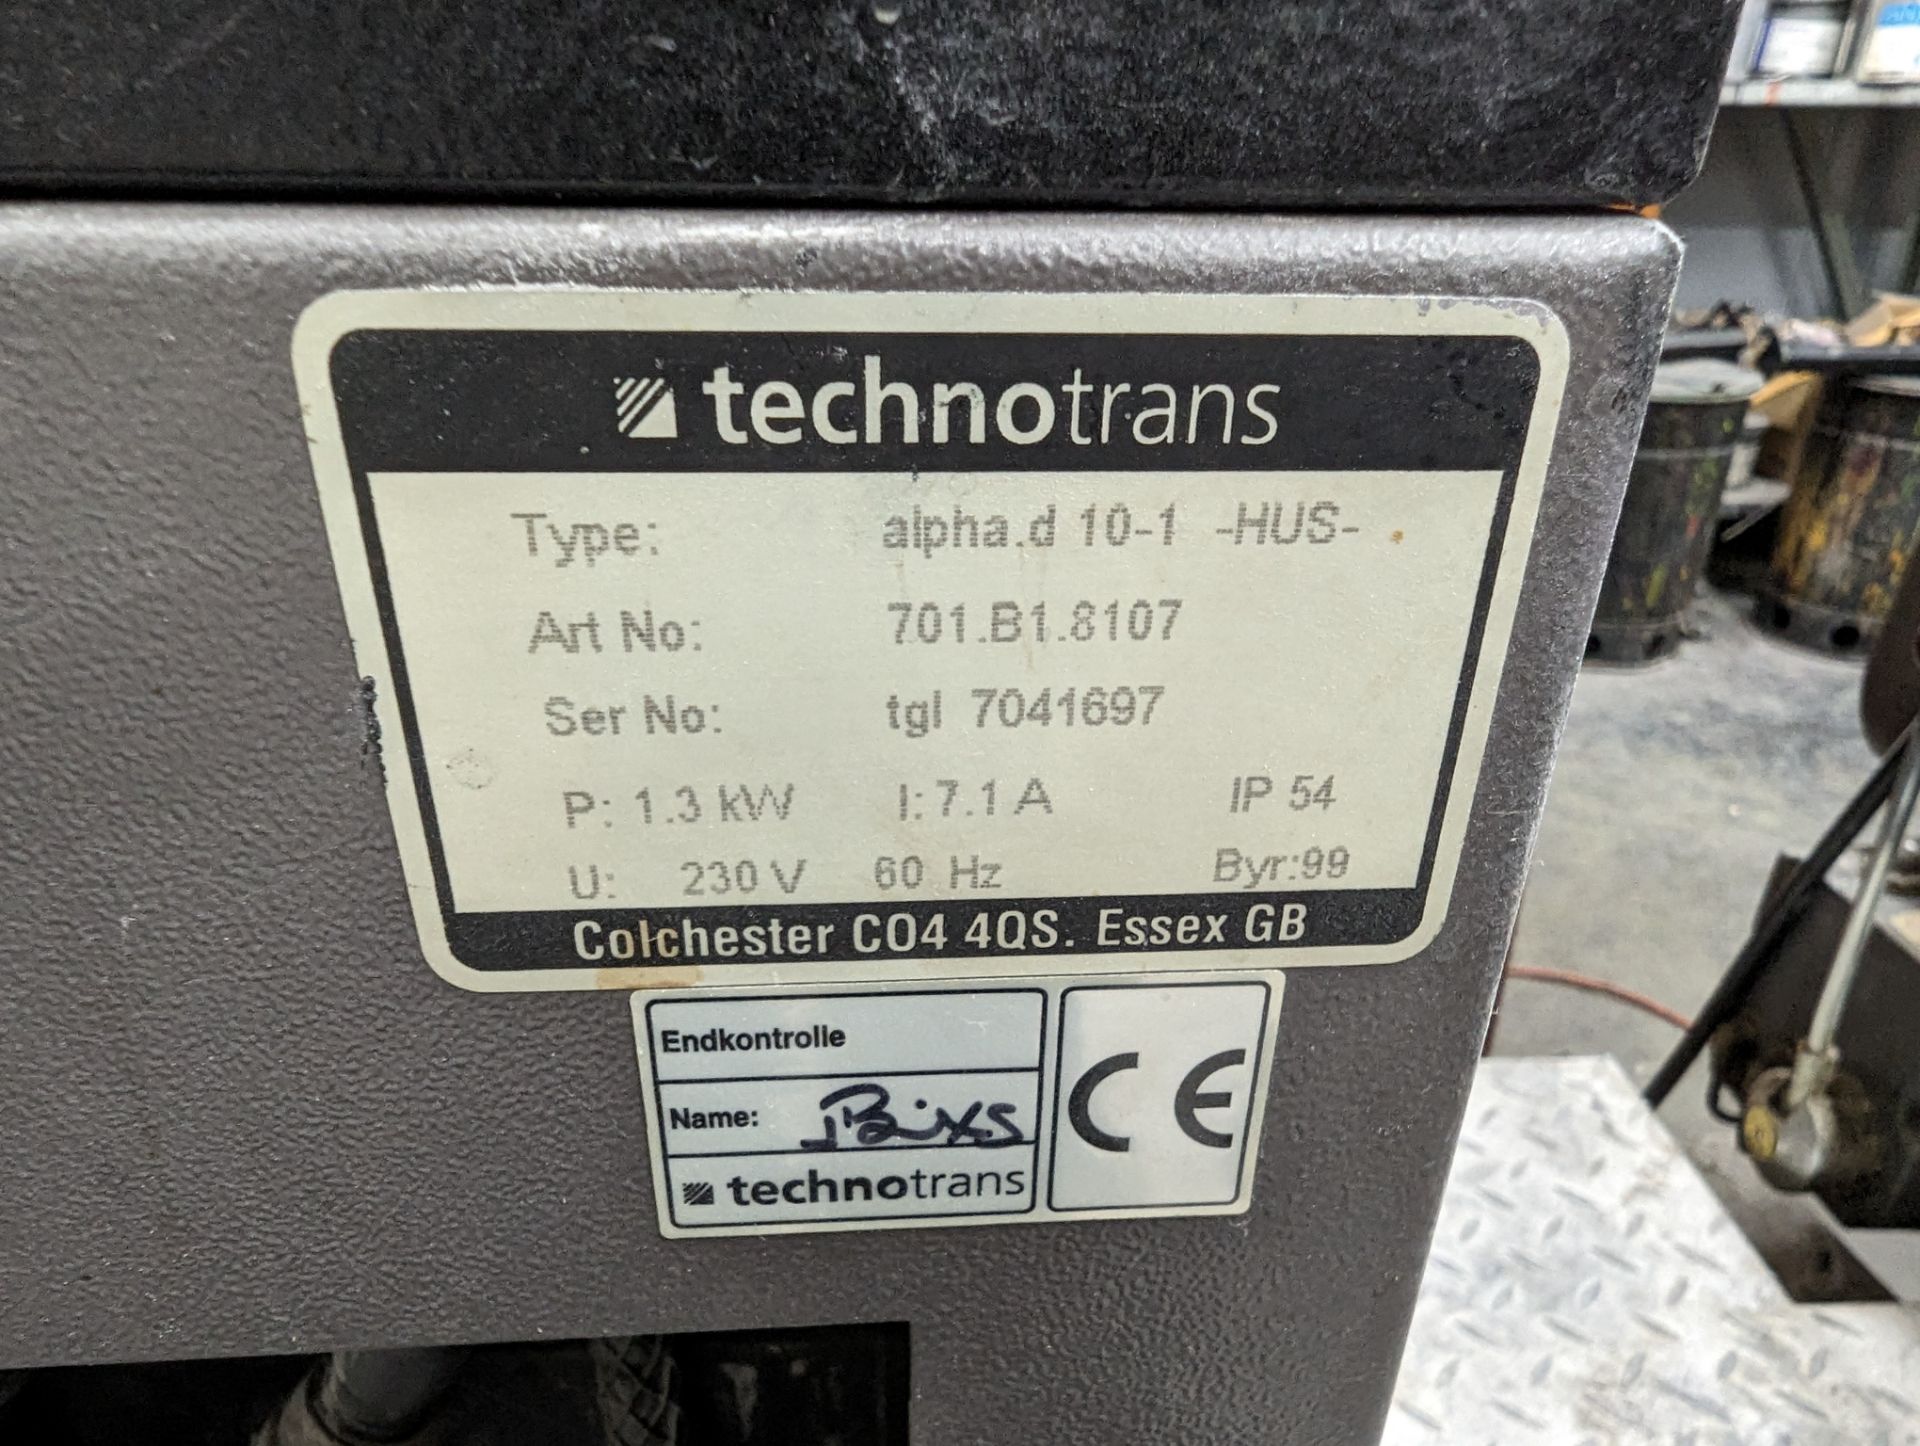 HEIDELBERG PRINTMASTER GTO 52 4-COLOUR SHEET-FED OFFSET PRINTING PRESS, 14” X 20”, TECHNOTRANS - Image 21 of 22